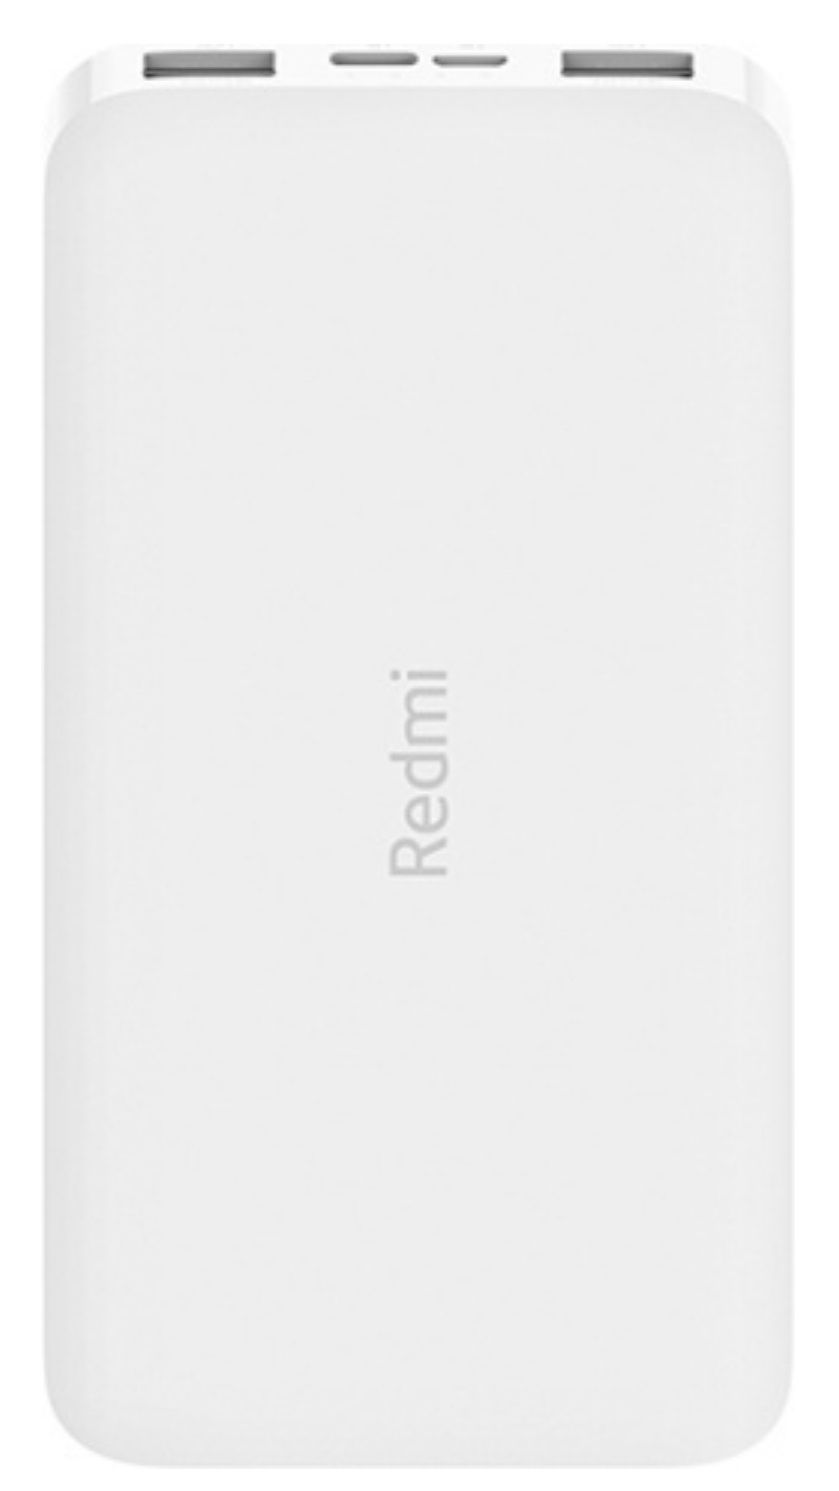 Бел пауэр. Внешний аккумулятор Xiaomi Redmi Power Bank 10000mah. Аккумулятор Xiaomi Redmi pb100. Аккумулятор Redmi Power Bank 10000mah. Аккумулятор Xiaomi Redmi Power Bank 10000.